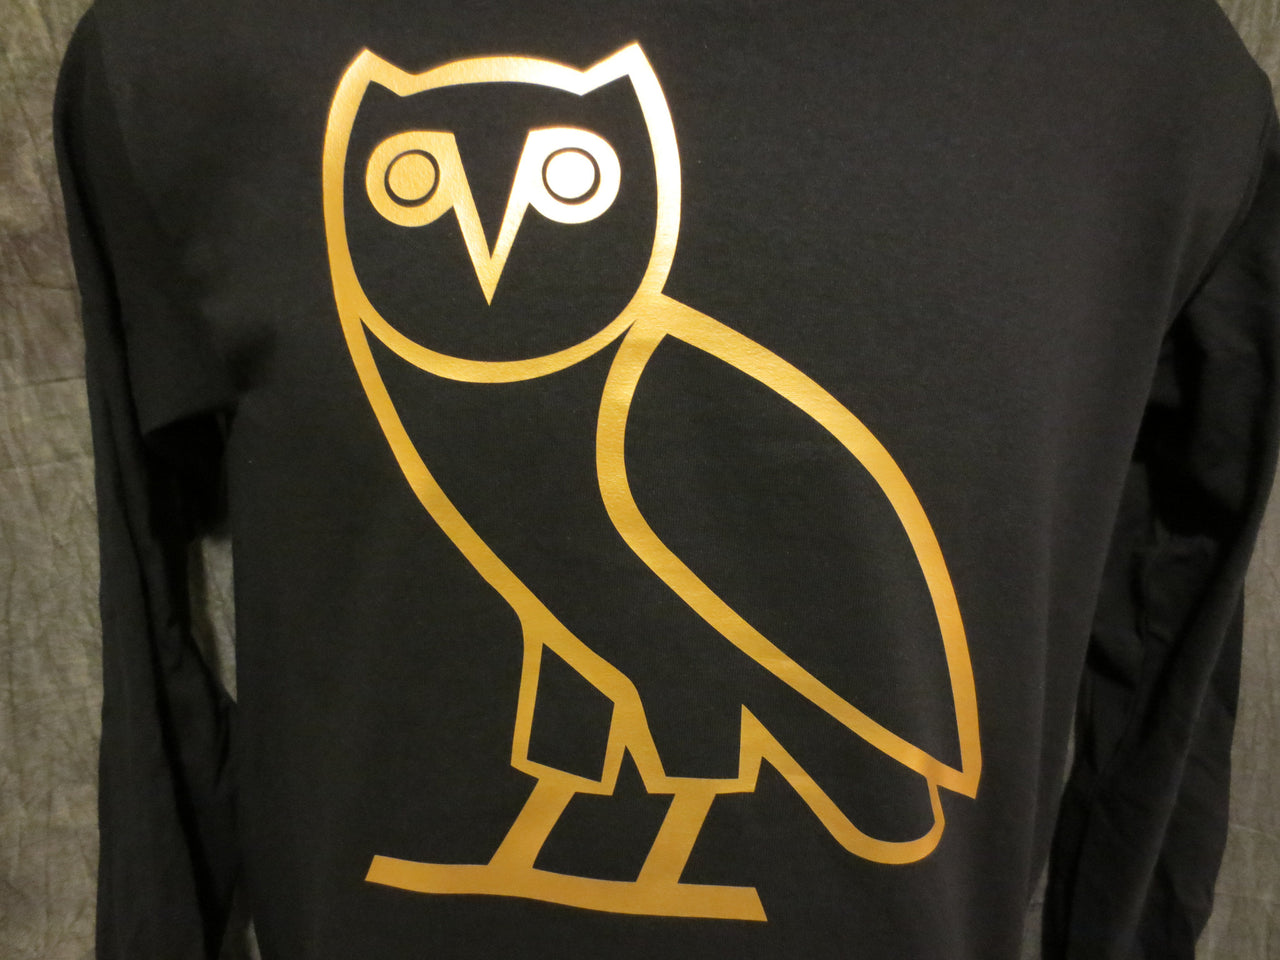 Ovo Drake October's Very Own Ovoxo Owl Gang Longsleeve Black Tshirt - TshirtNow.net - 3